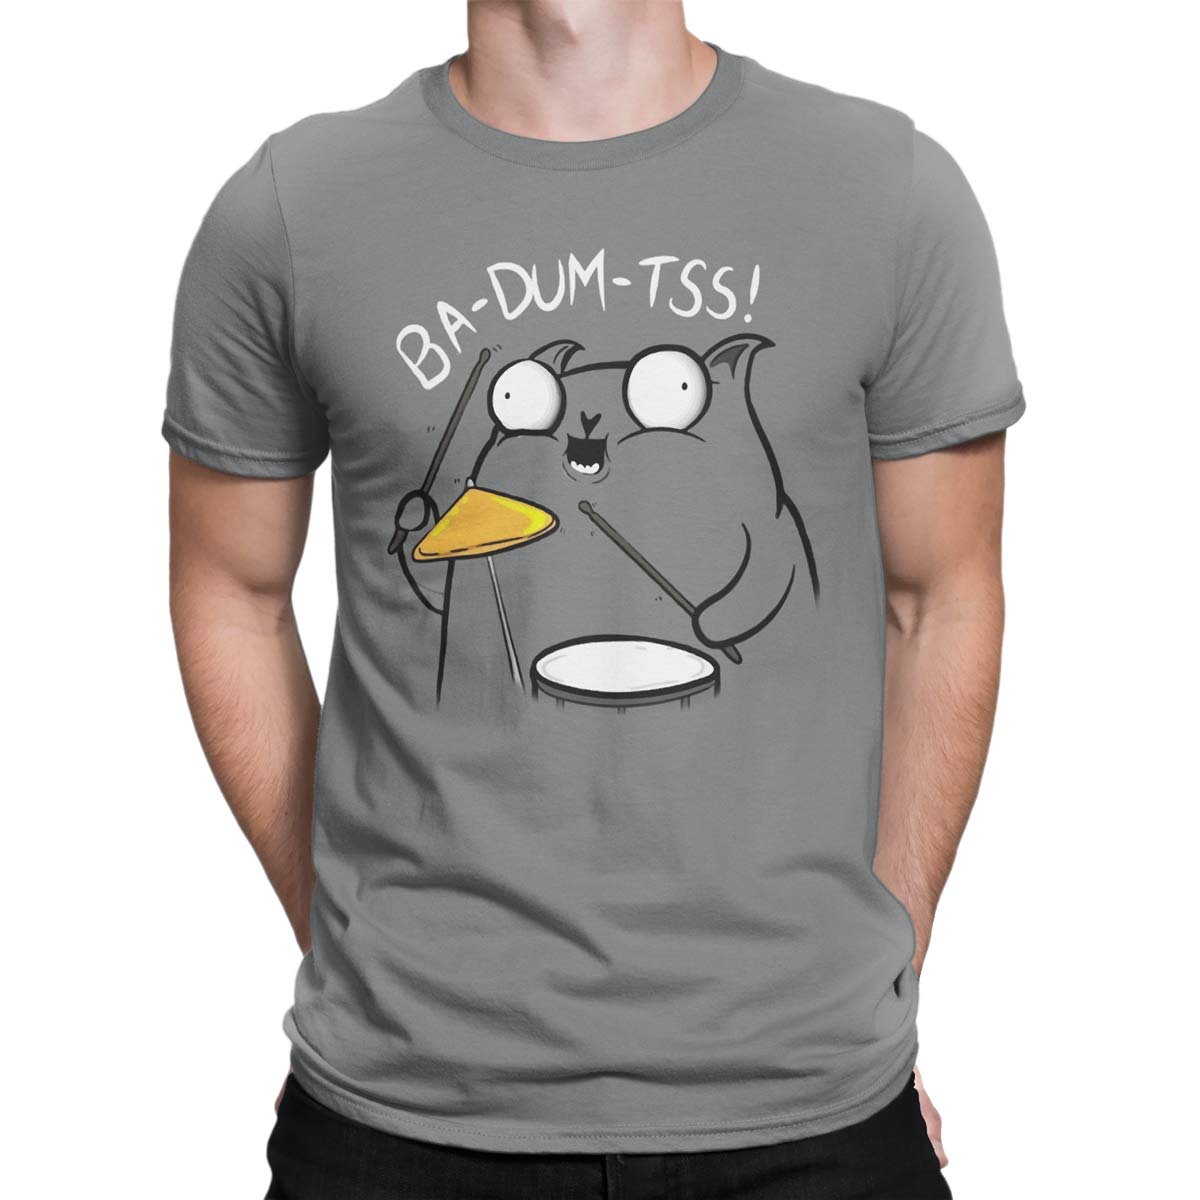 Funny T-Shirts. "Ba Dum Tss" Unisex T-Shirt. 100%